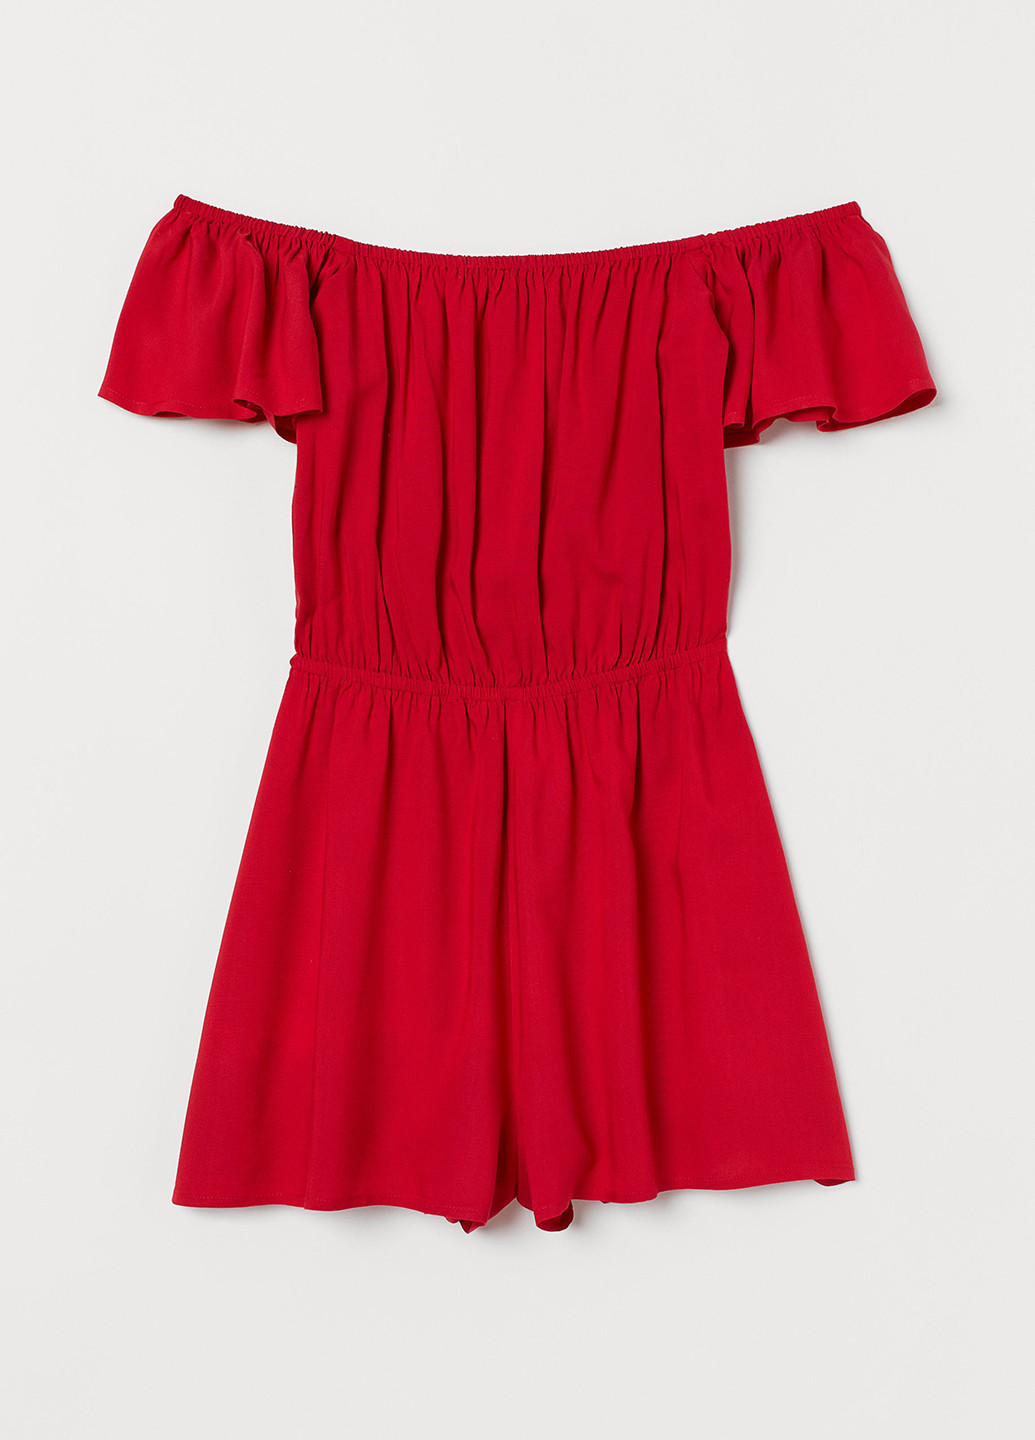 Комбинезон H&M комбинезон-шорты однотонный красный кэжуал трикотаж, вискоза